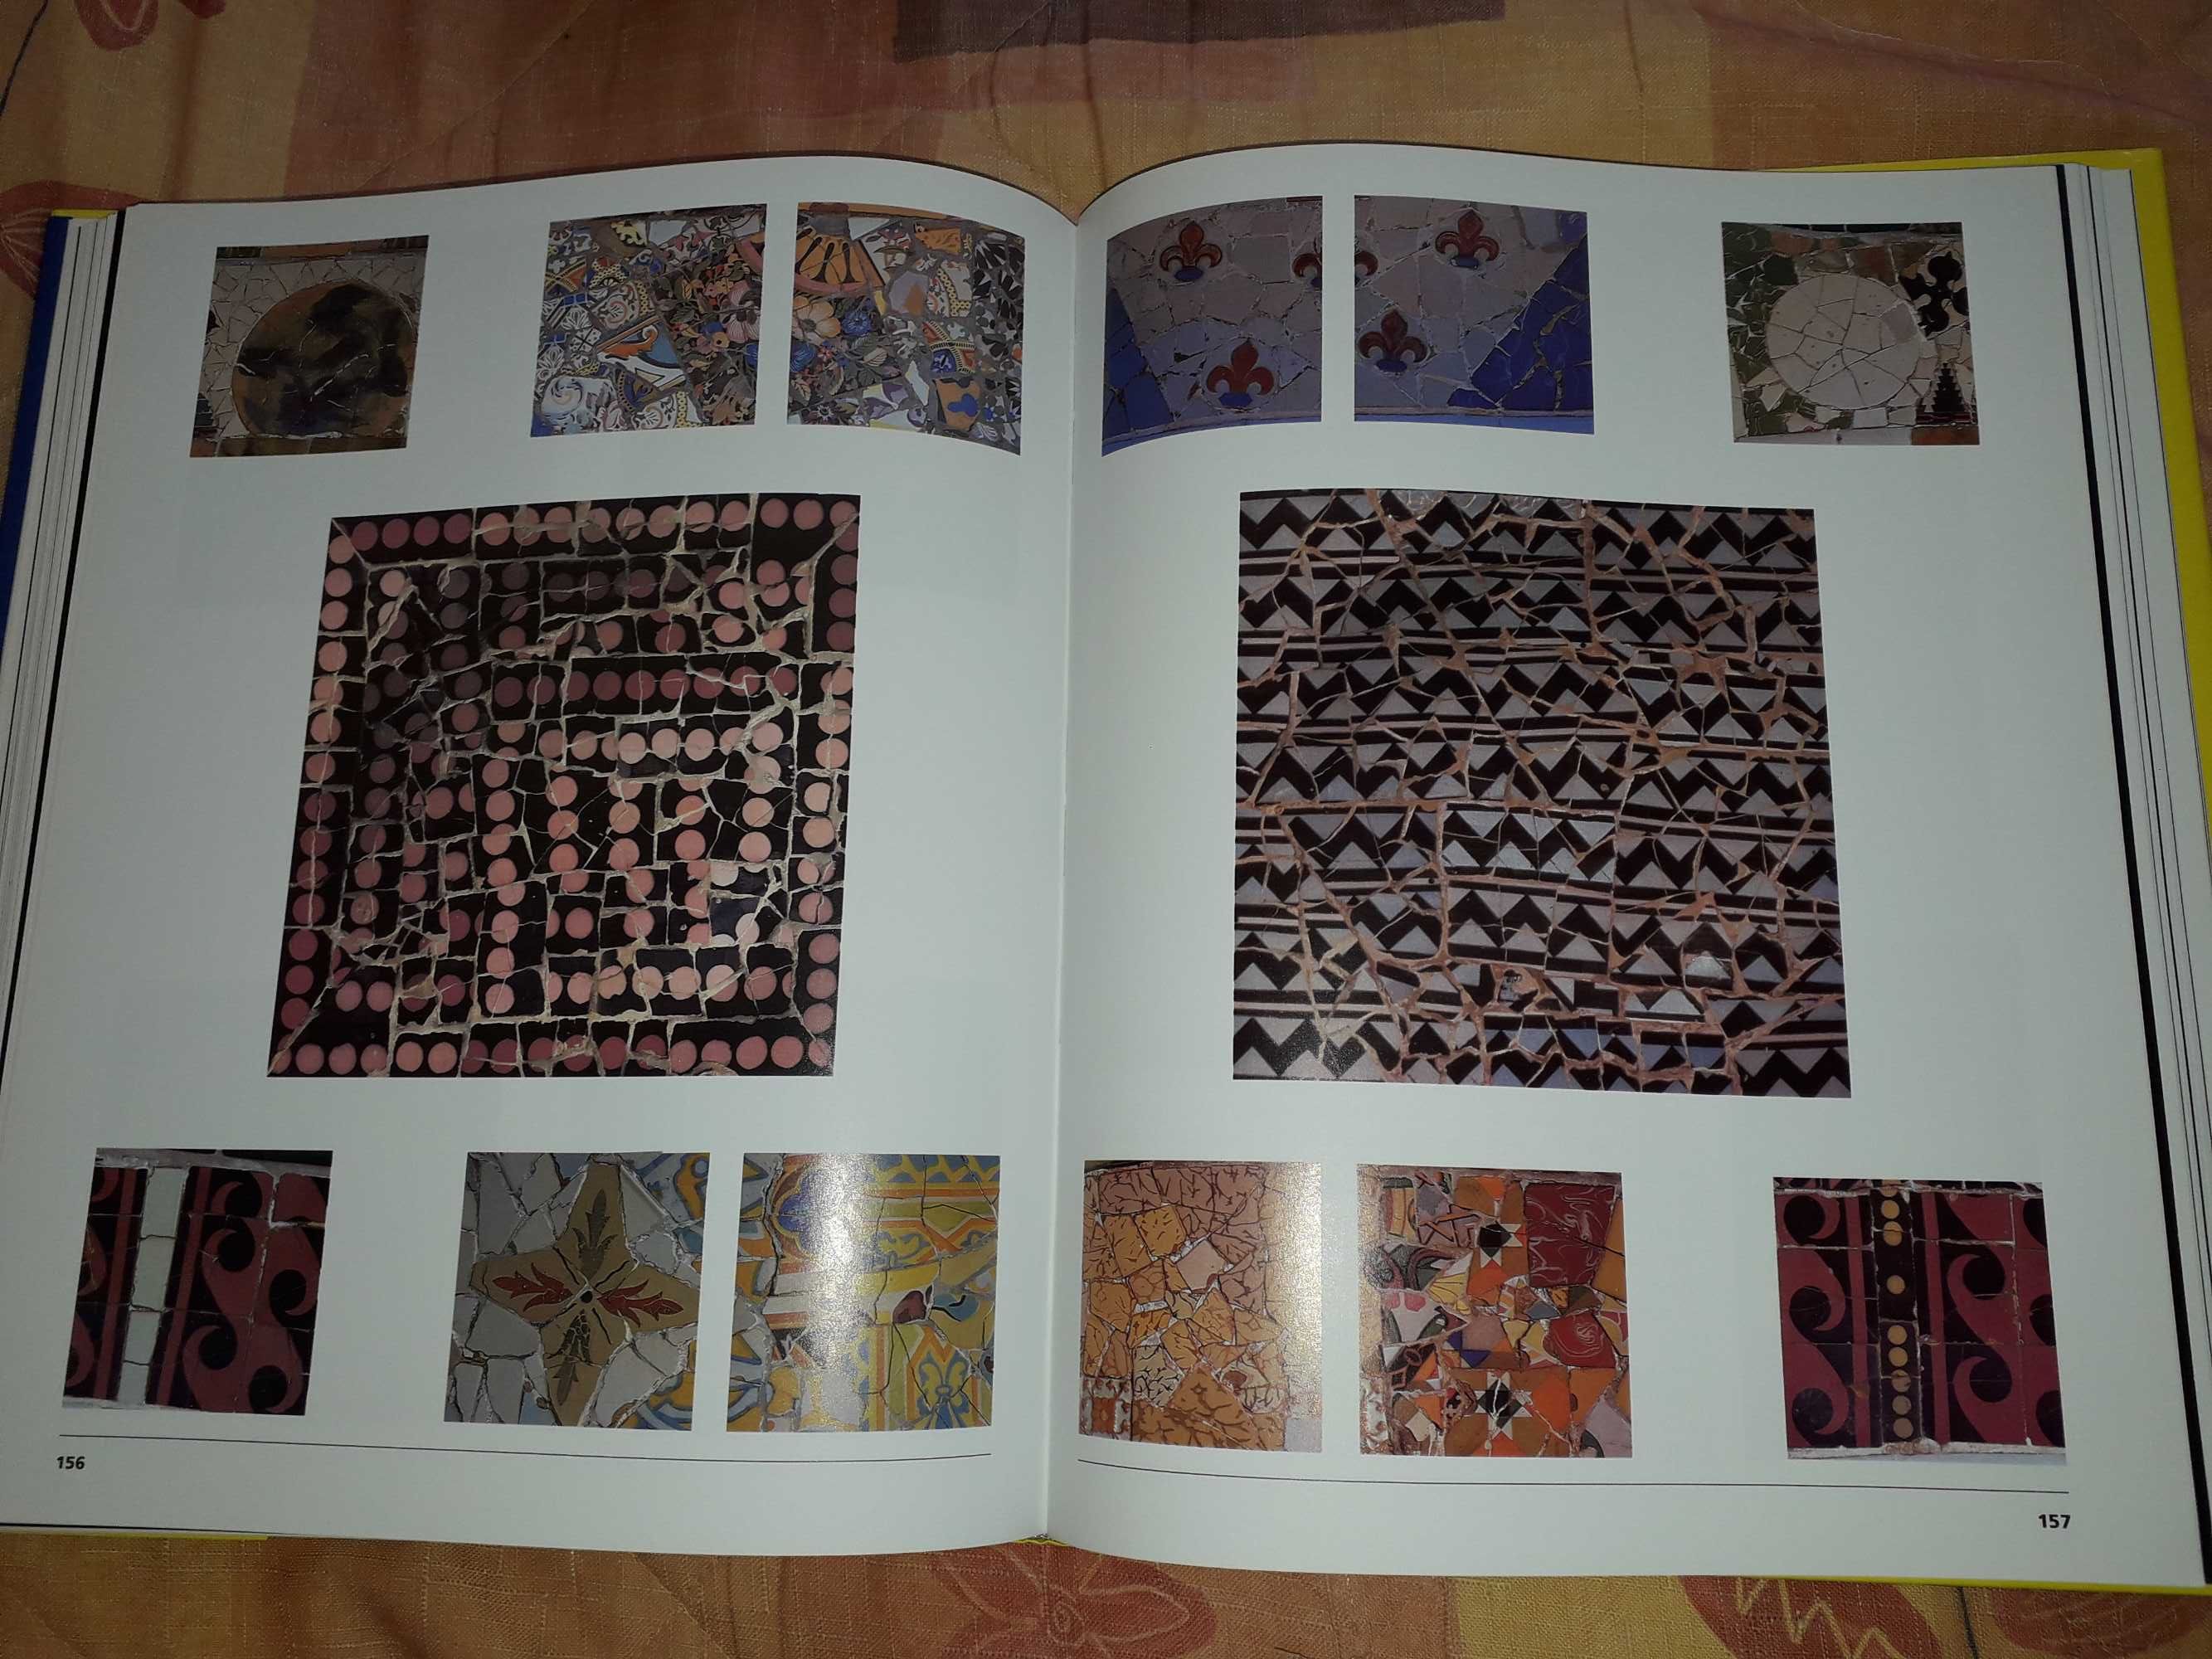 Antoni Gaudi Rainer Zerbst piękny album architektura sztuka